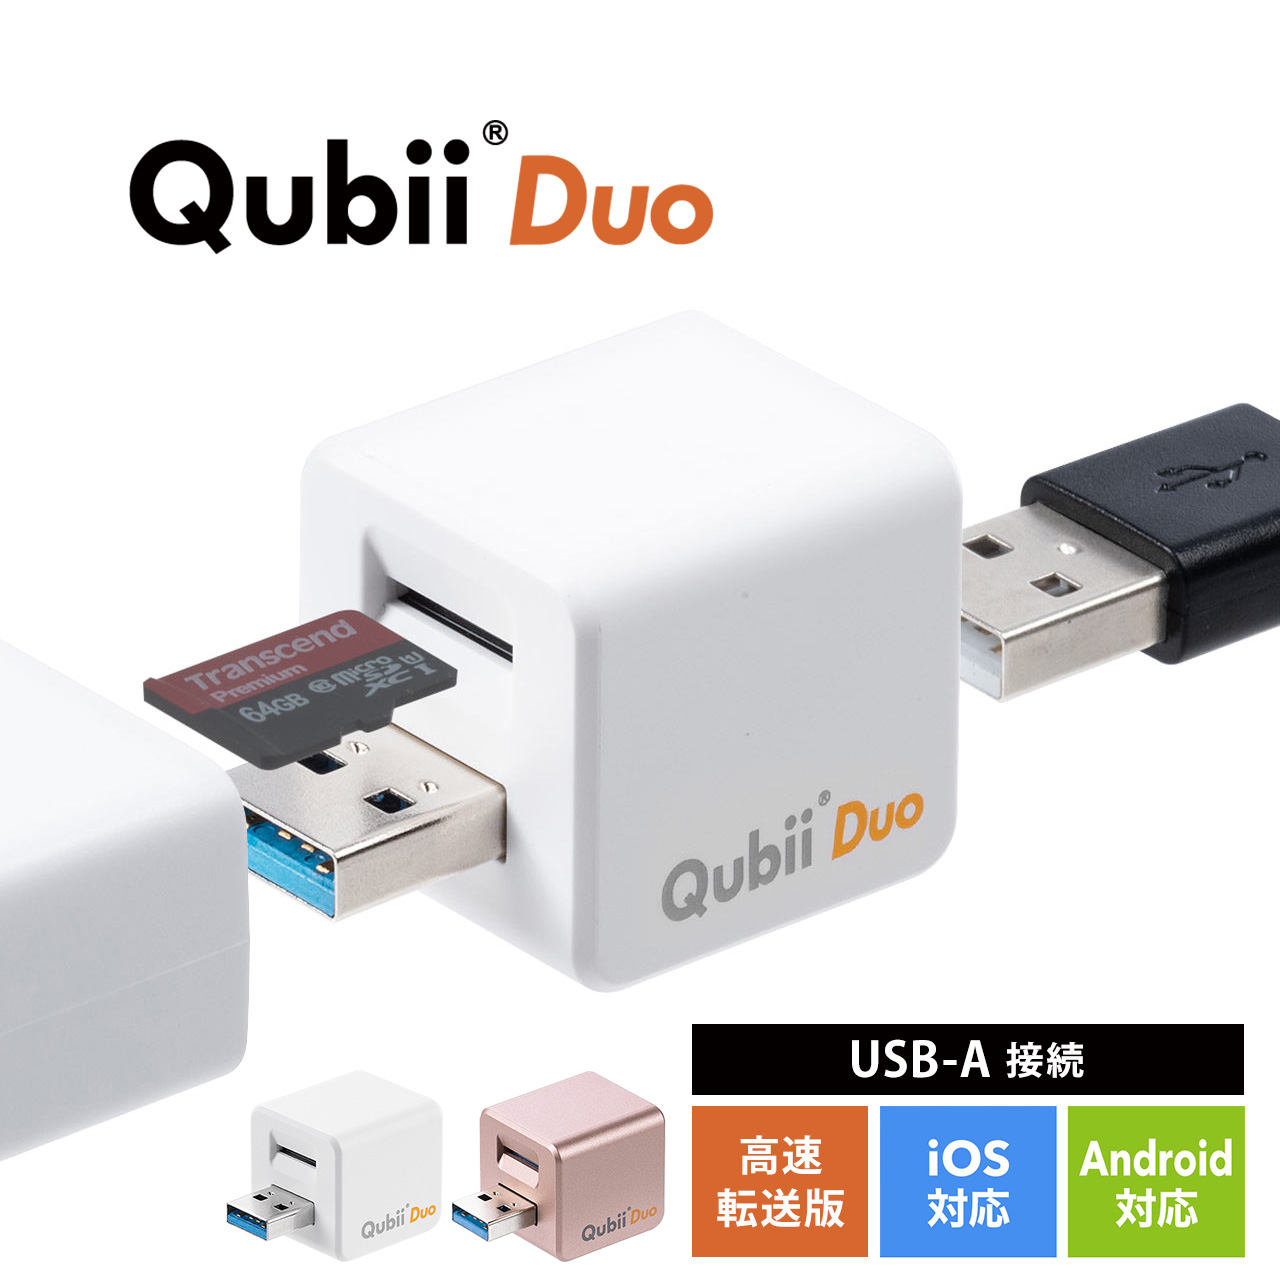 ACアダプタと本体を接続し、専用アプリ「Qubii Pro」を利用してiPhone 